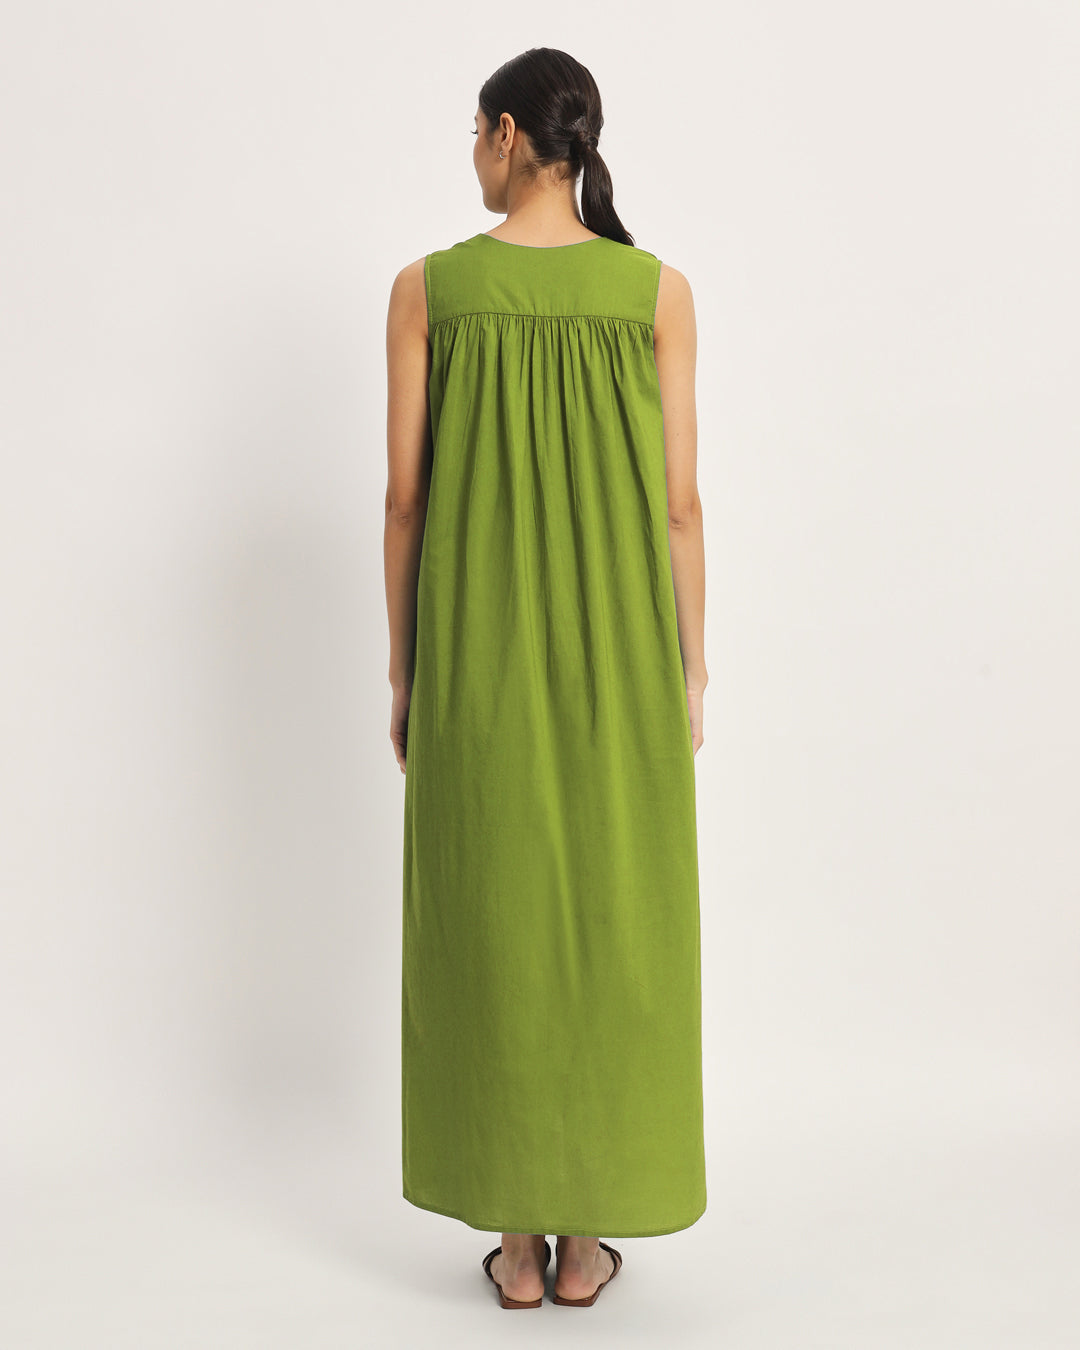 Combo: Black & Sage Green Mommylicious Maternity & Nursing Dress